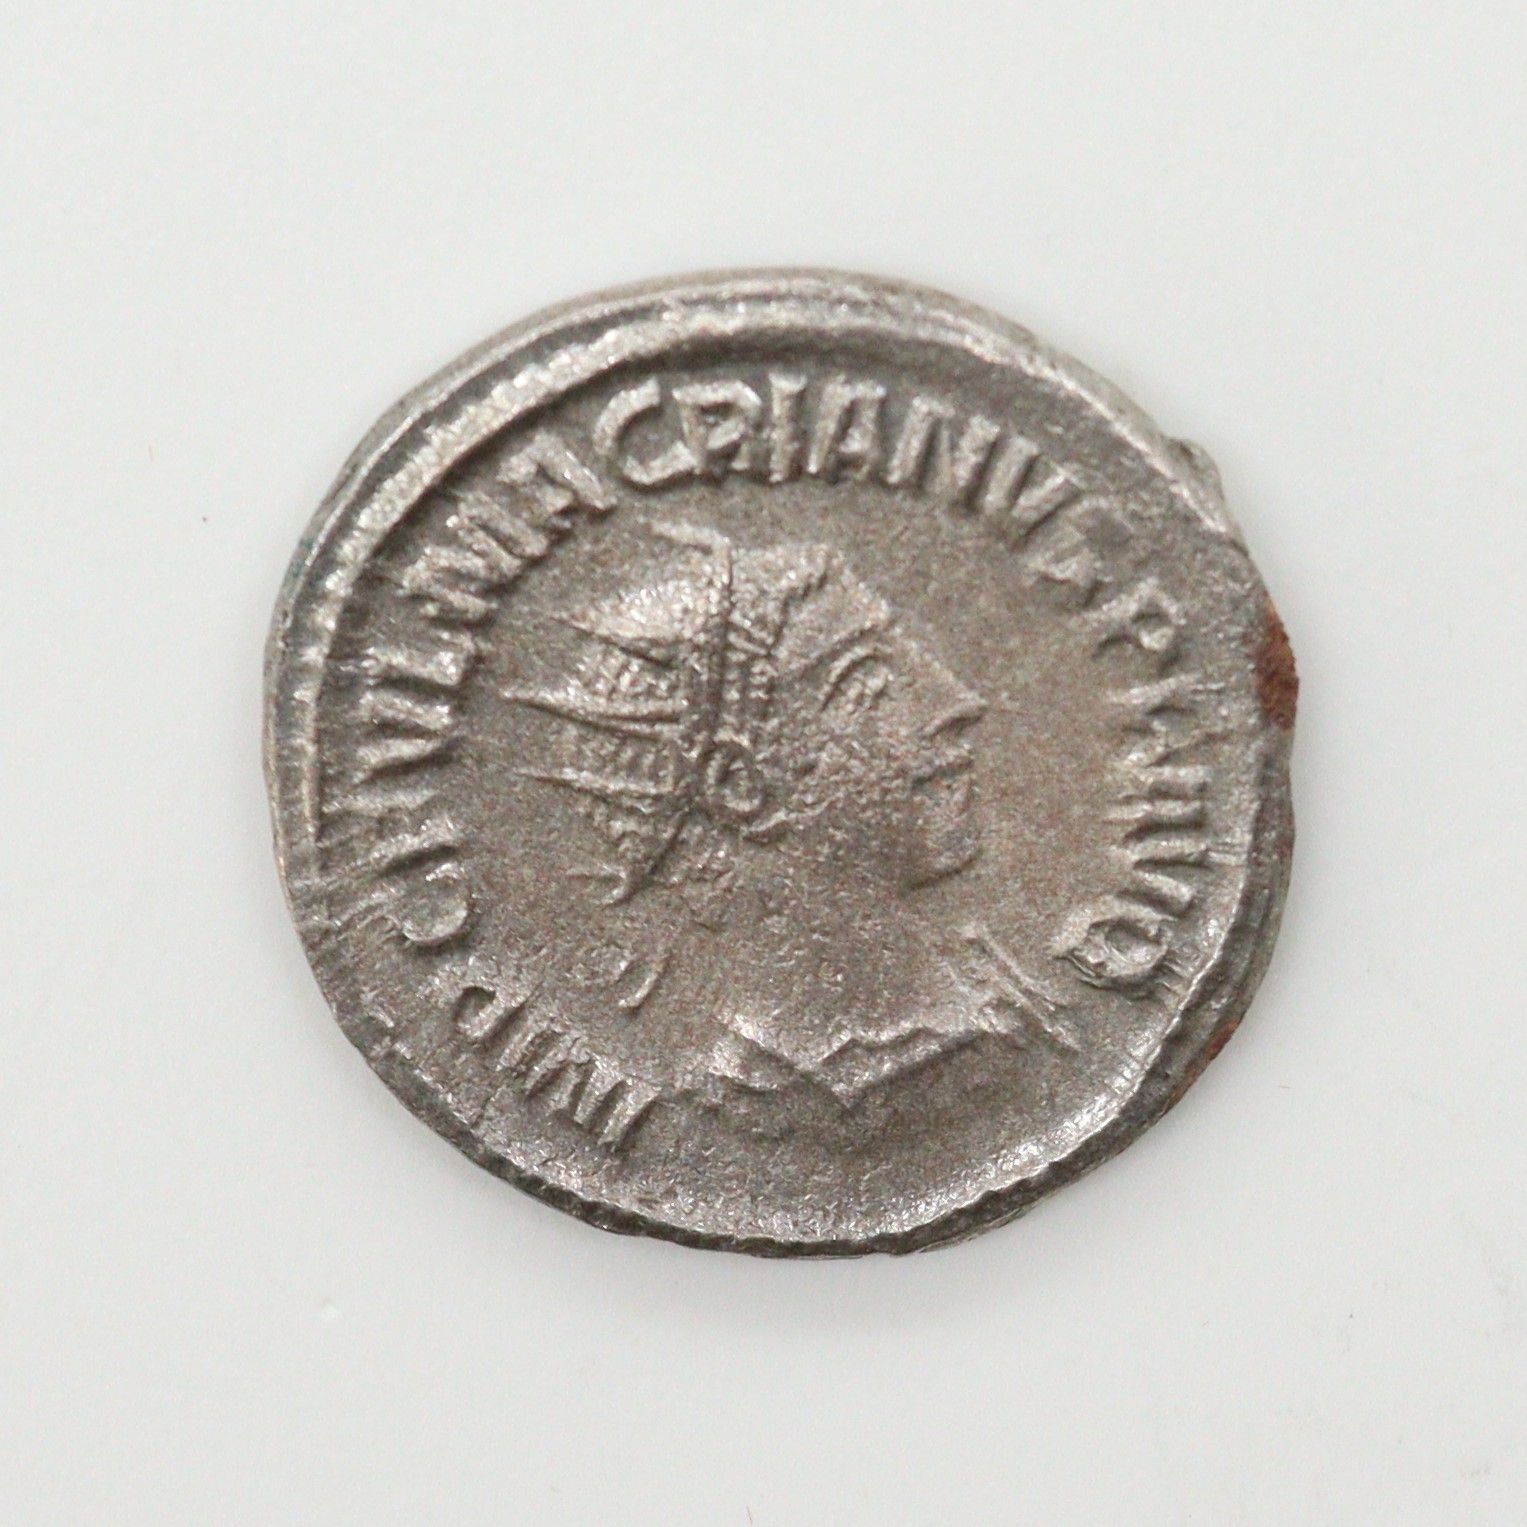 Null MACRIAN (260-261)

Antoninian 

R/ SOL INVICTO The standing sun

Mir 36/174&hellip;